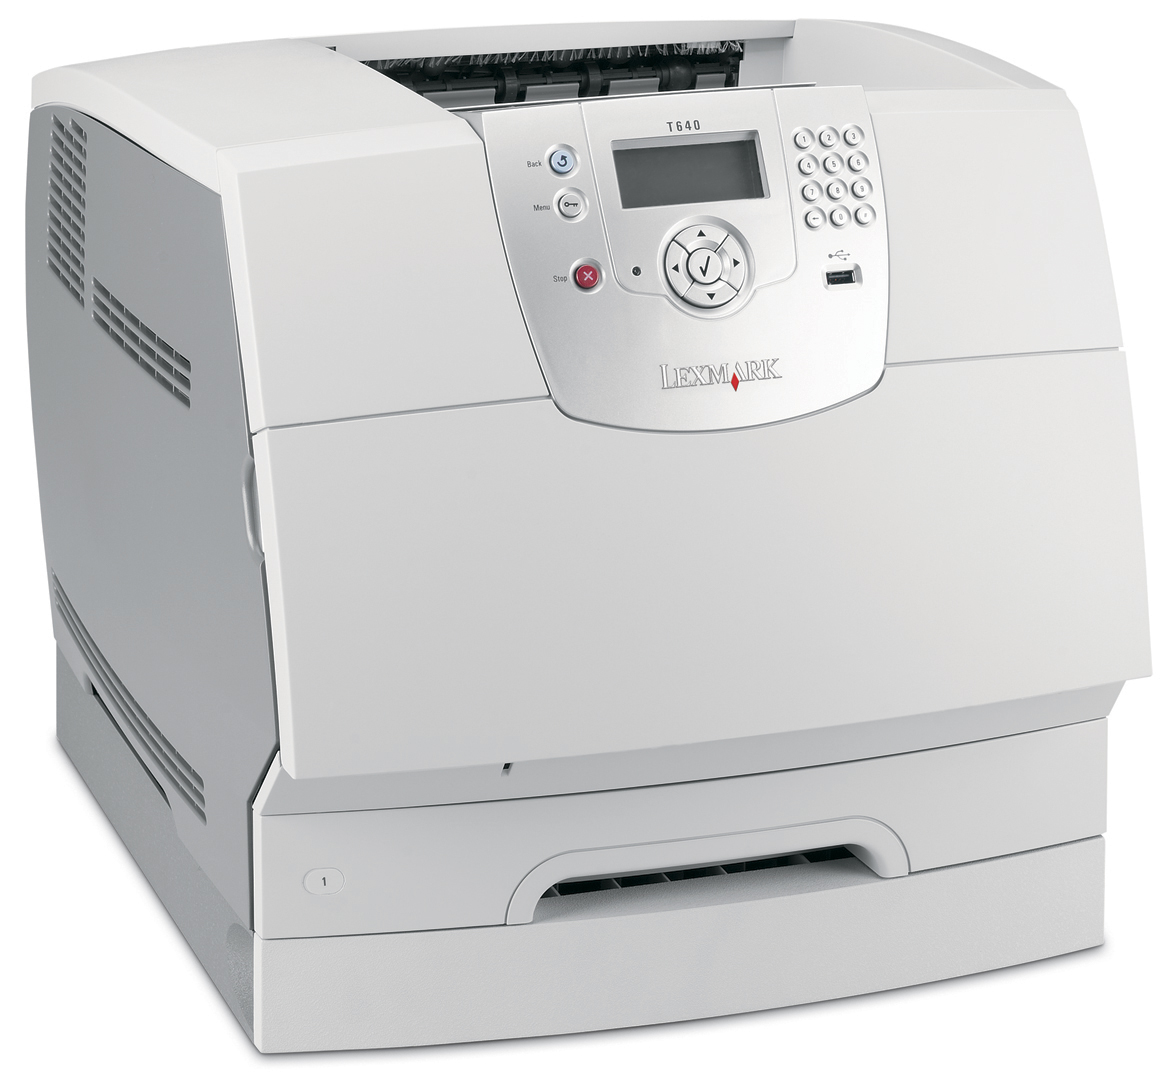 Lexmark T640 MICR Printer